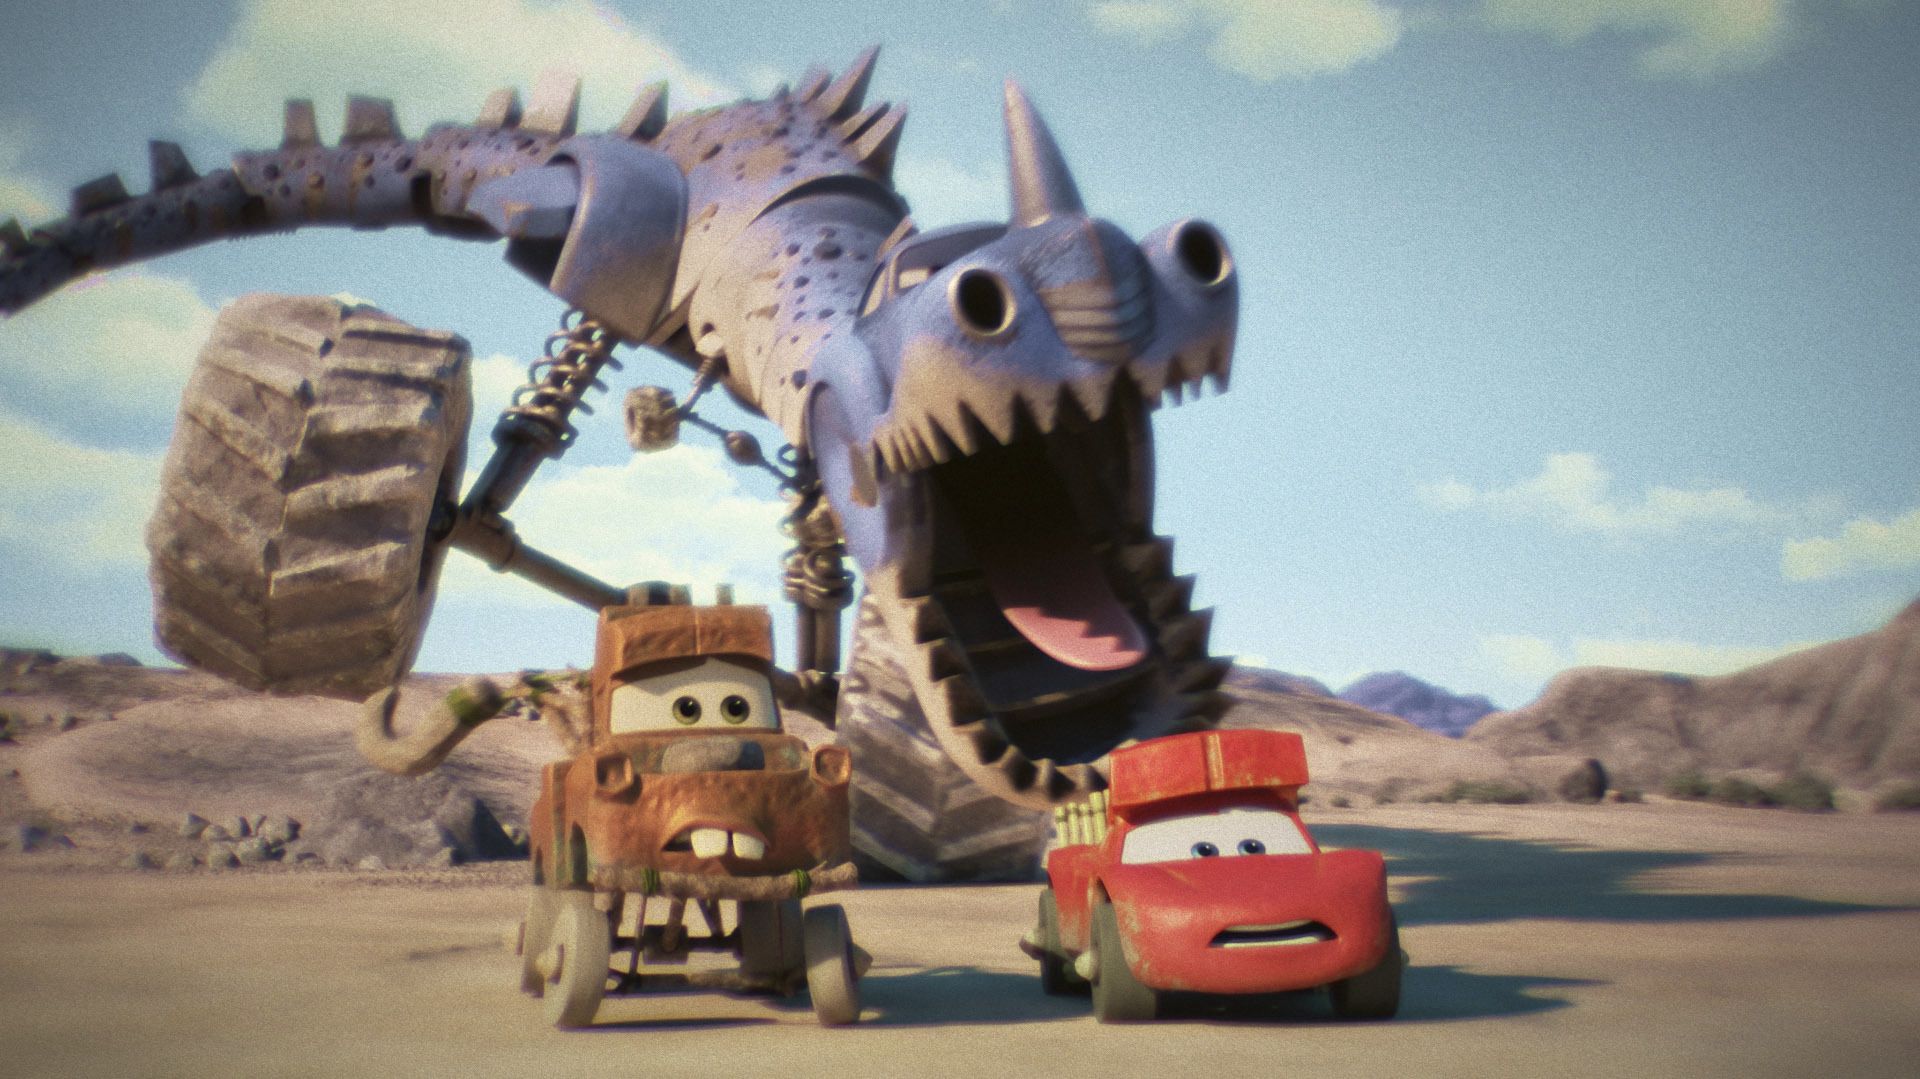 Pixar Franchise to Debut 'Cars on the Road' on Disney+ Sept. 8